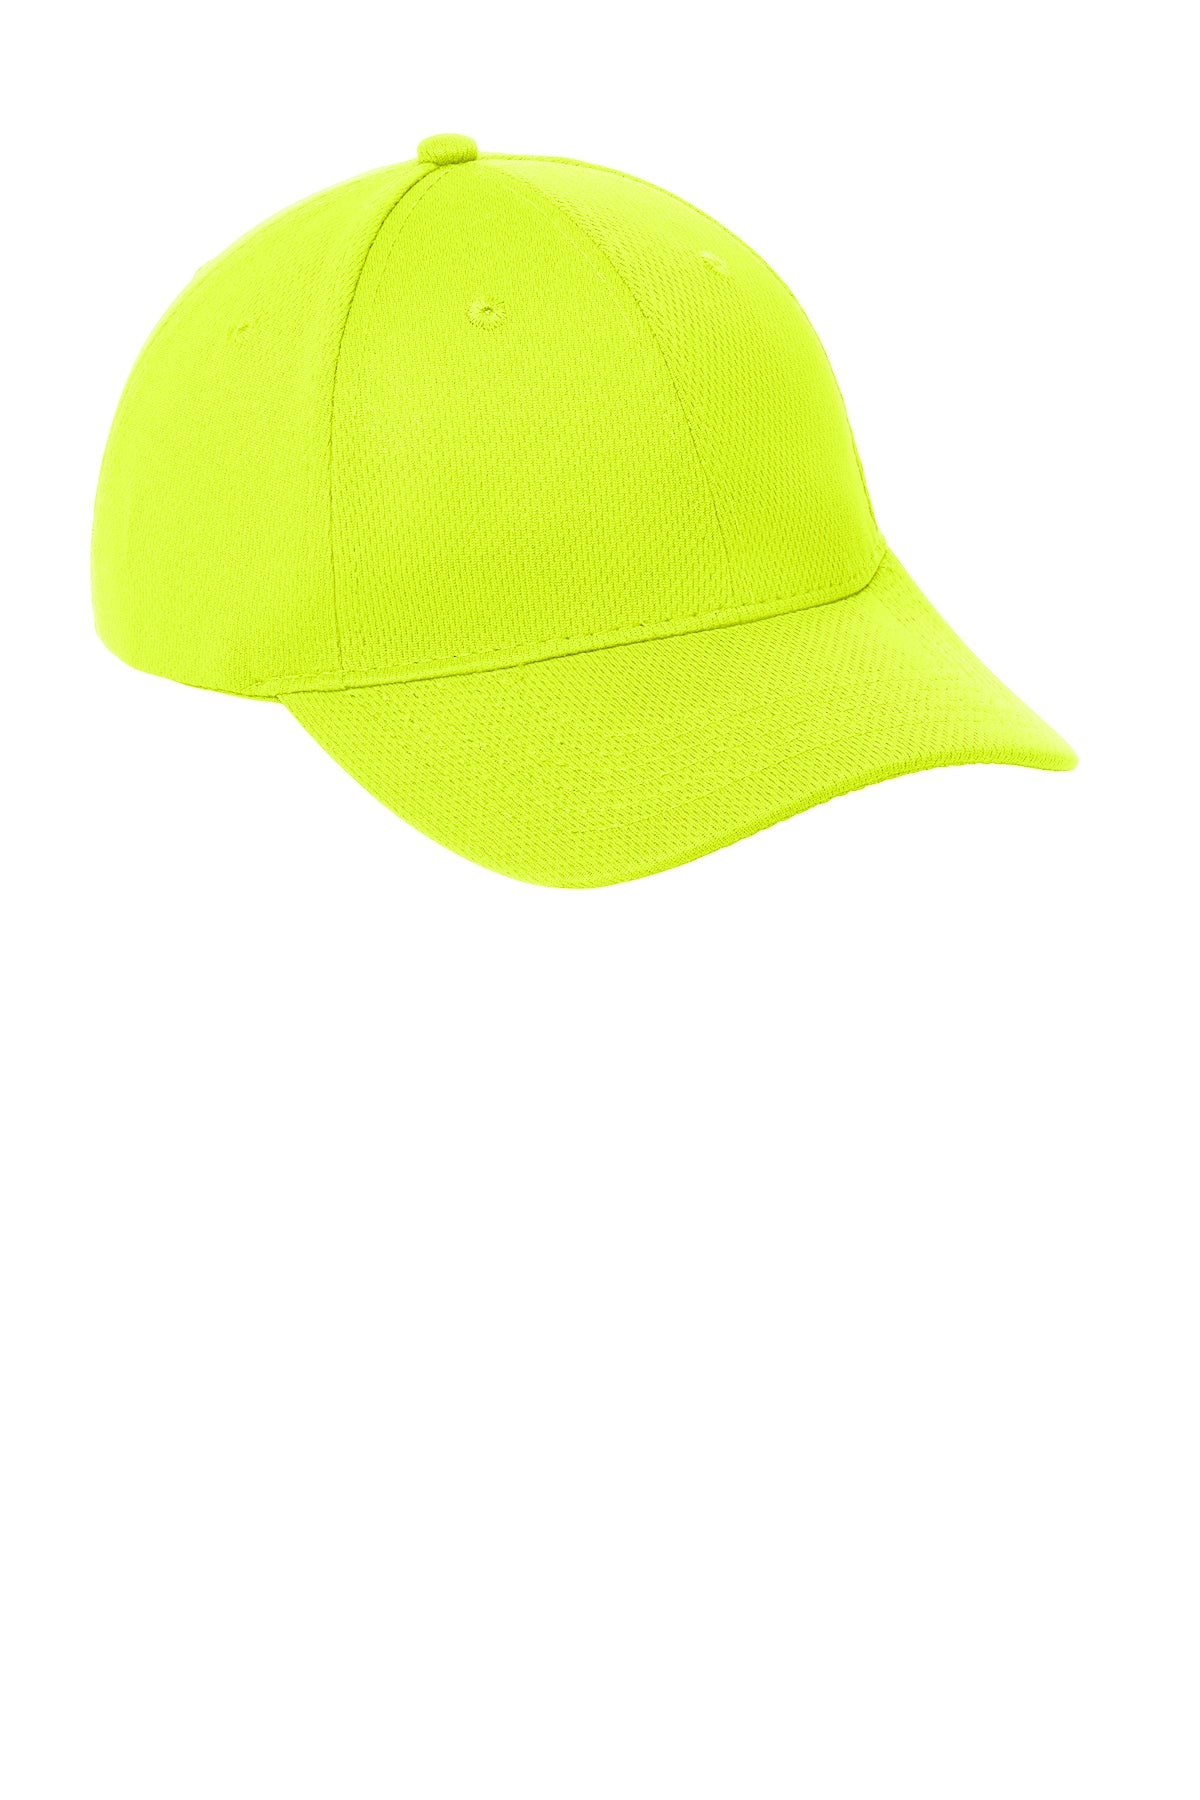 Sport-Tek PosiCharge RacerMesh Custom Caps, Neon Yellow